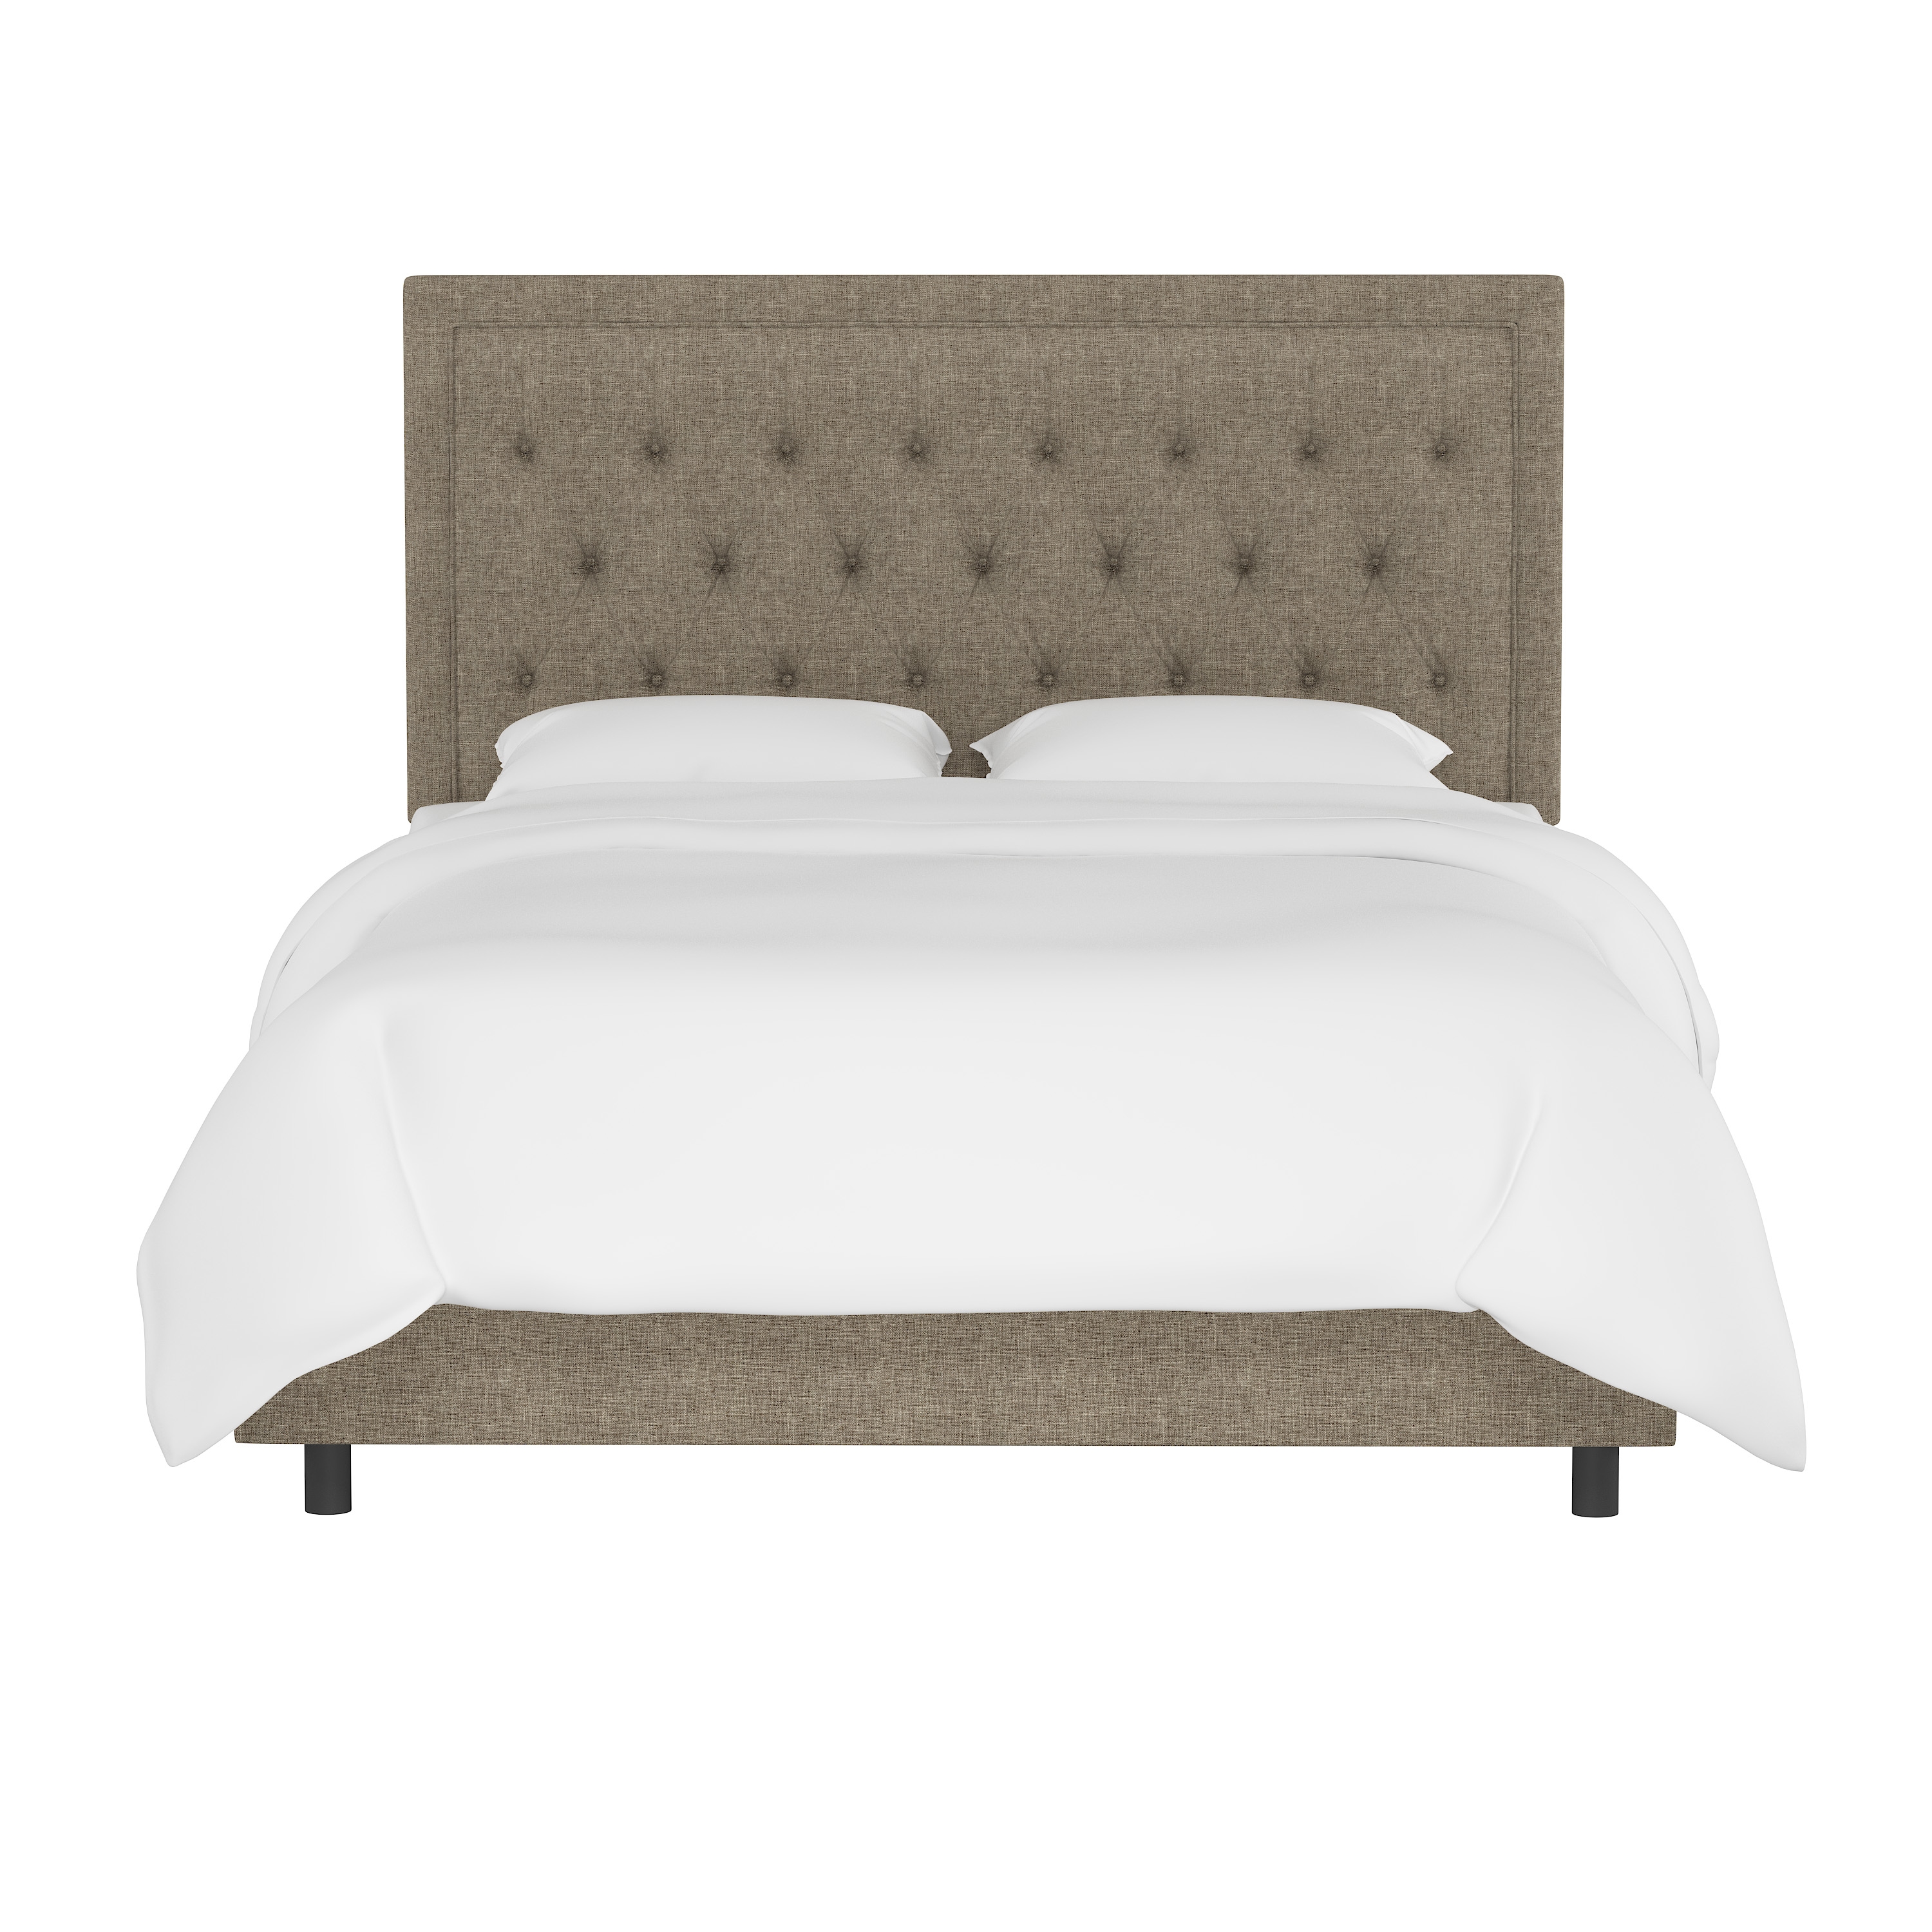 Lafayette Bed, Twin, Linen - Image 1